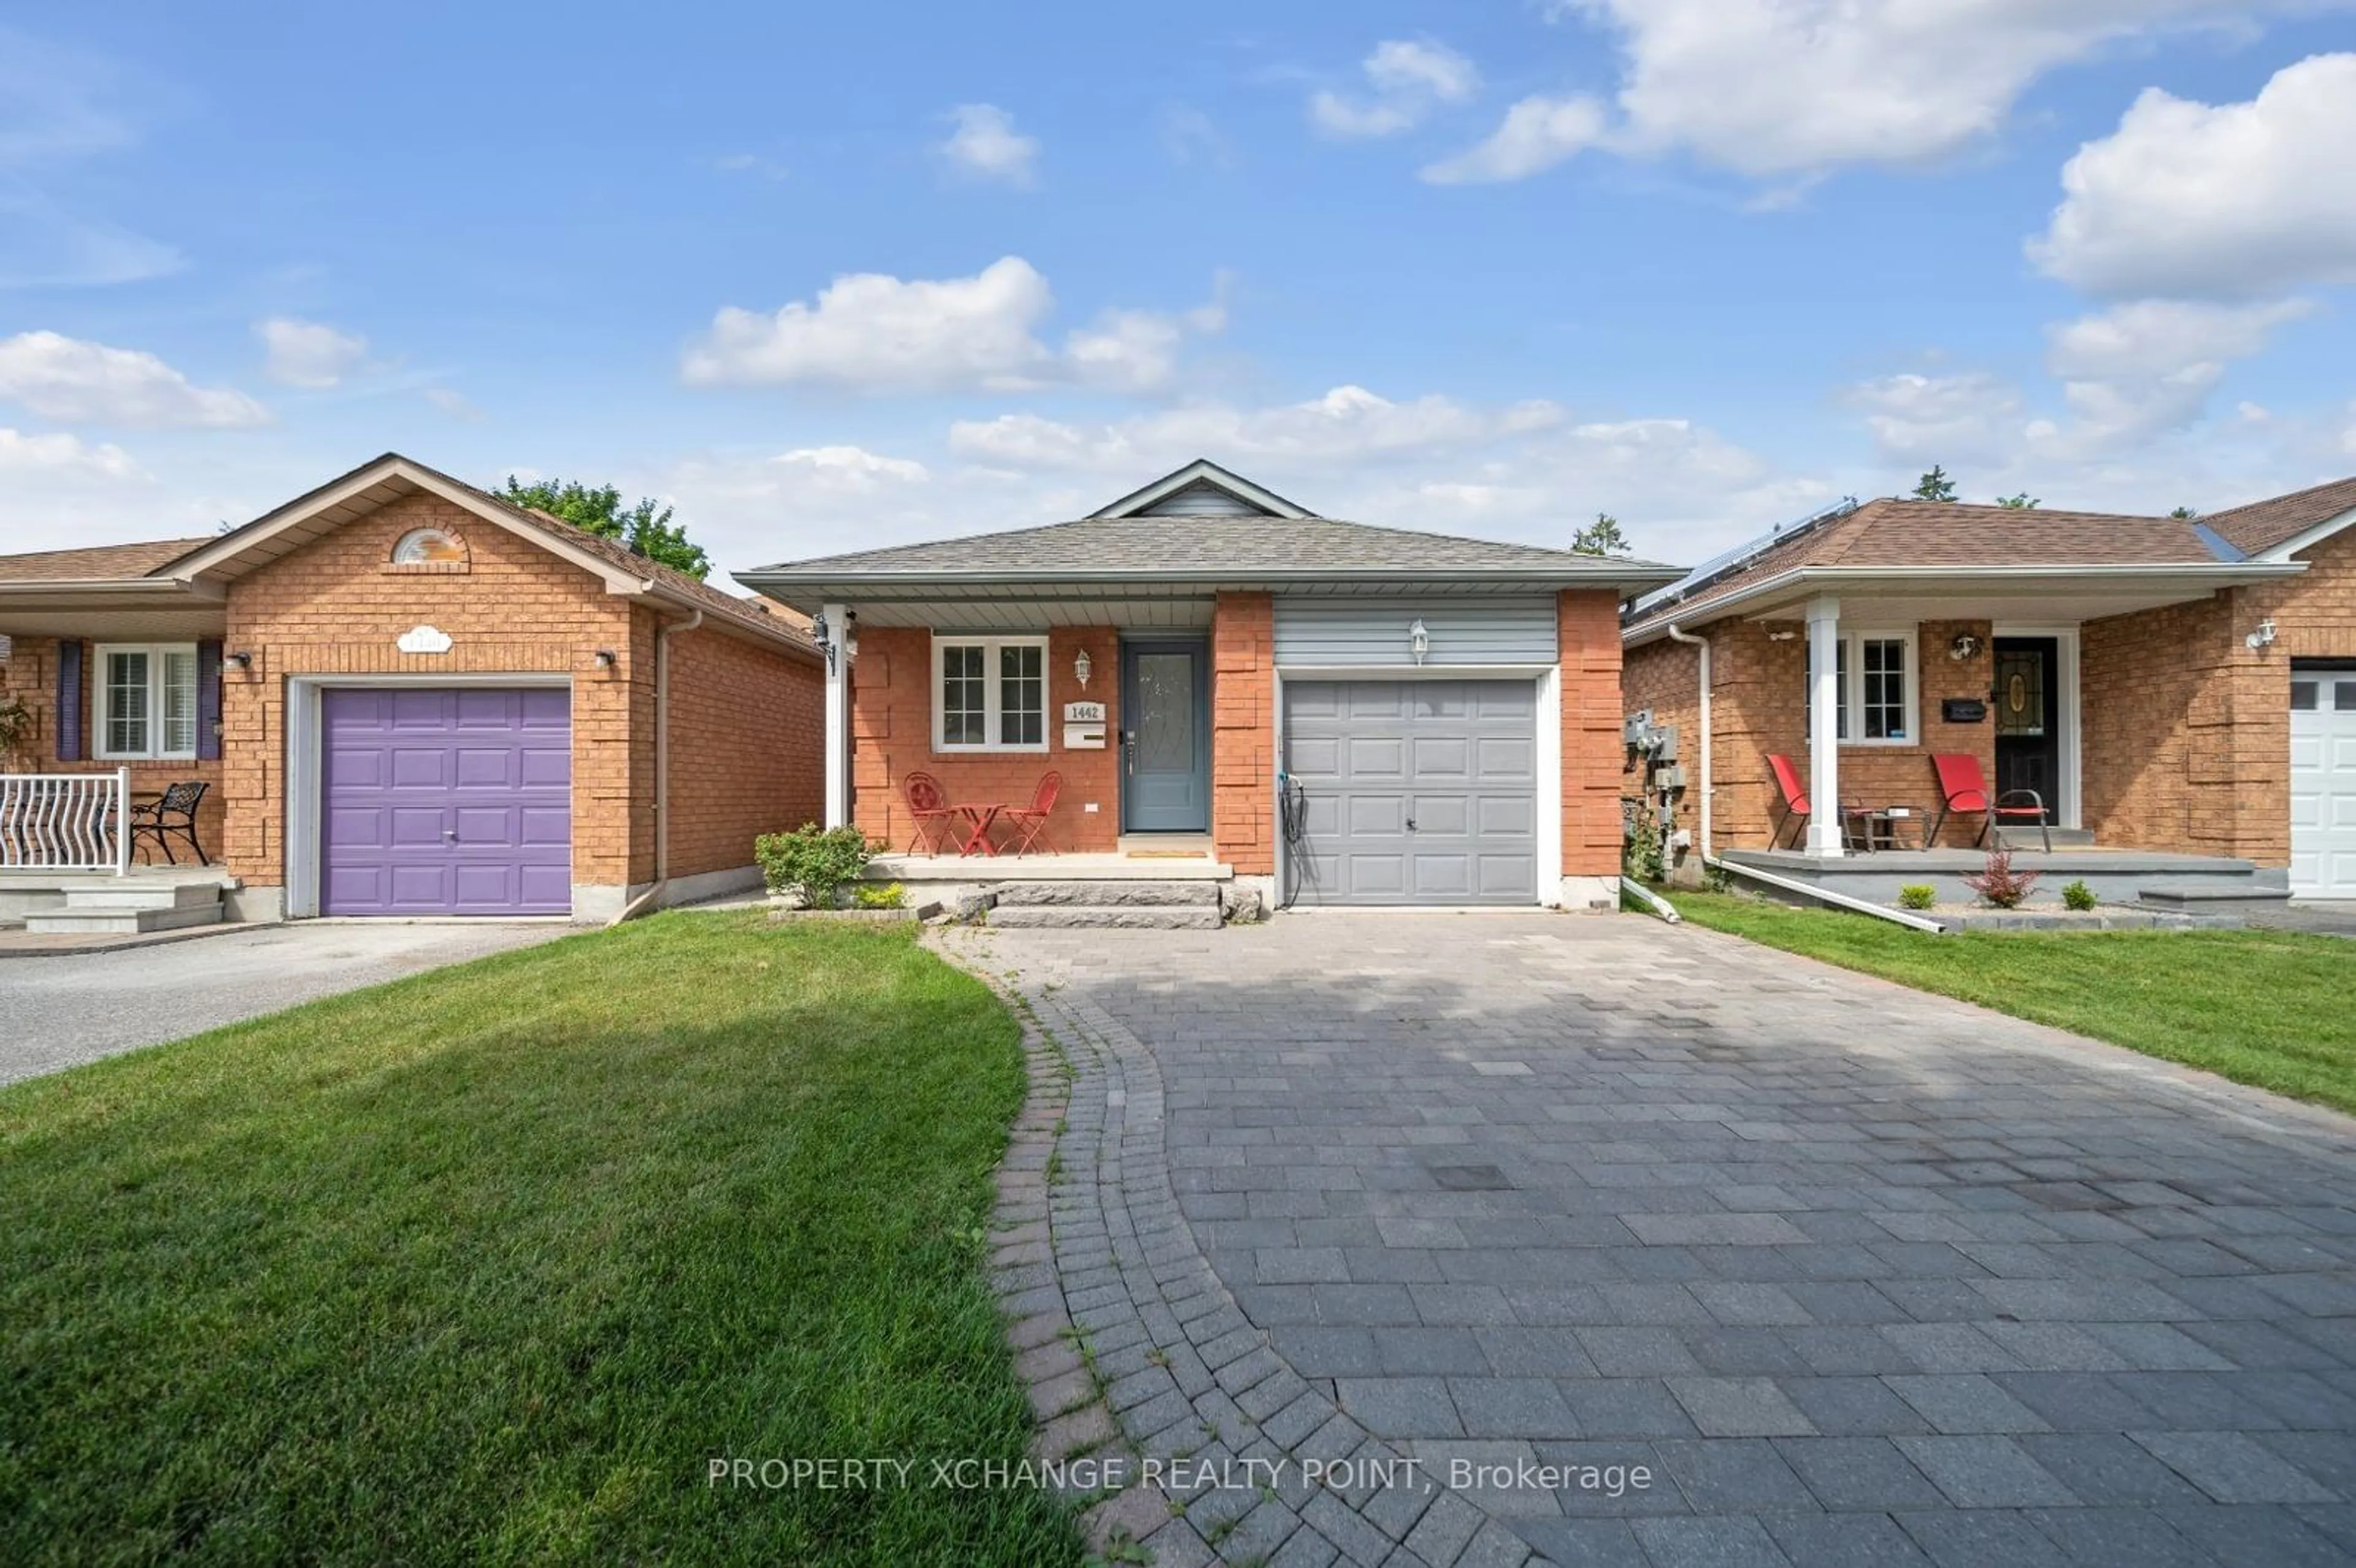 Home with brick exterior material for 1442 Largo Cres, Oshawa Ontario L1G 7E5